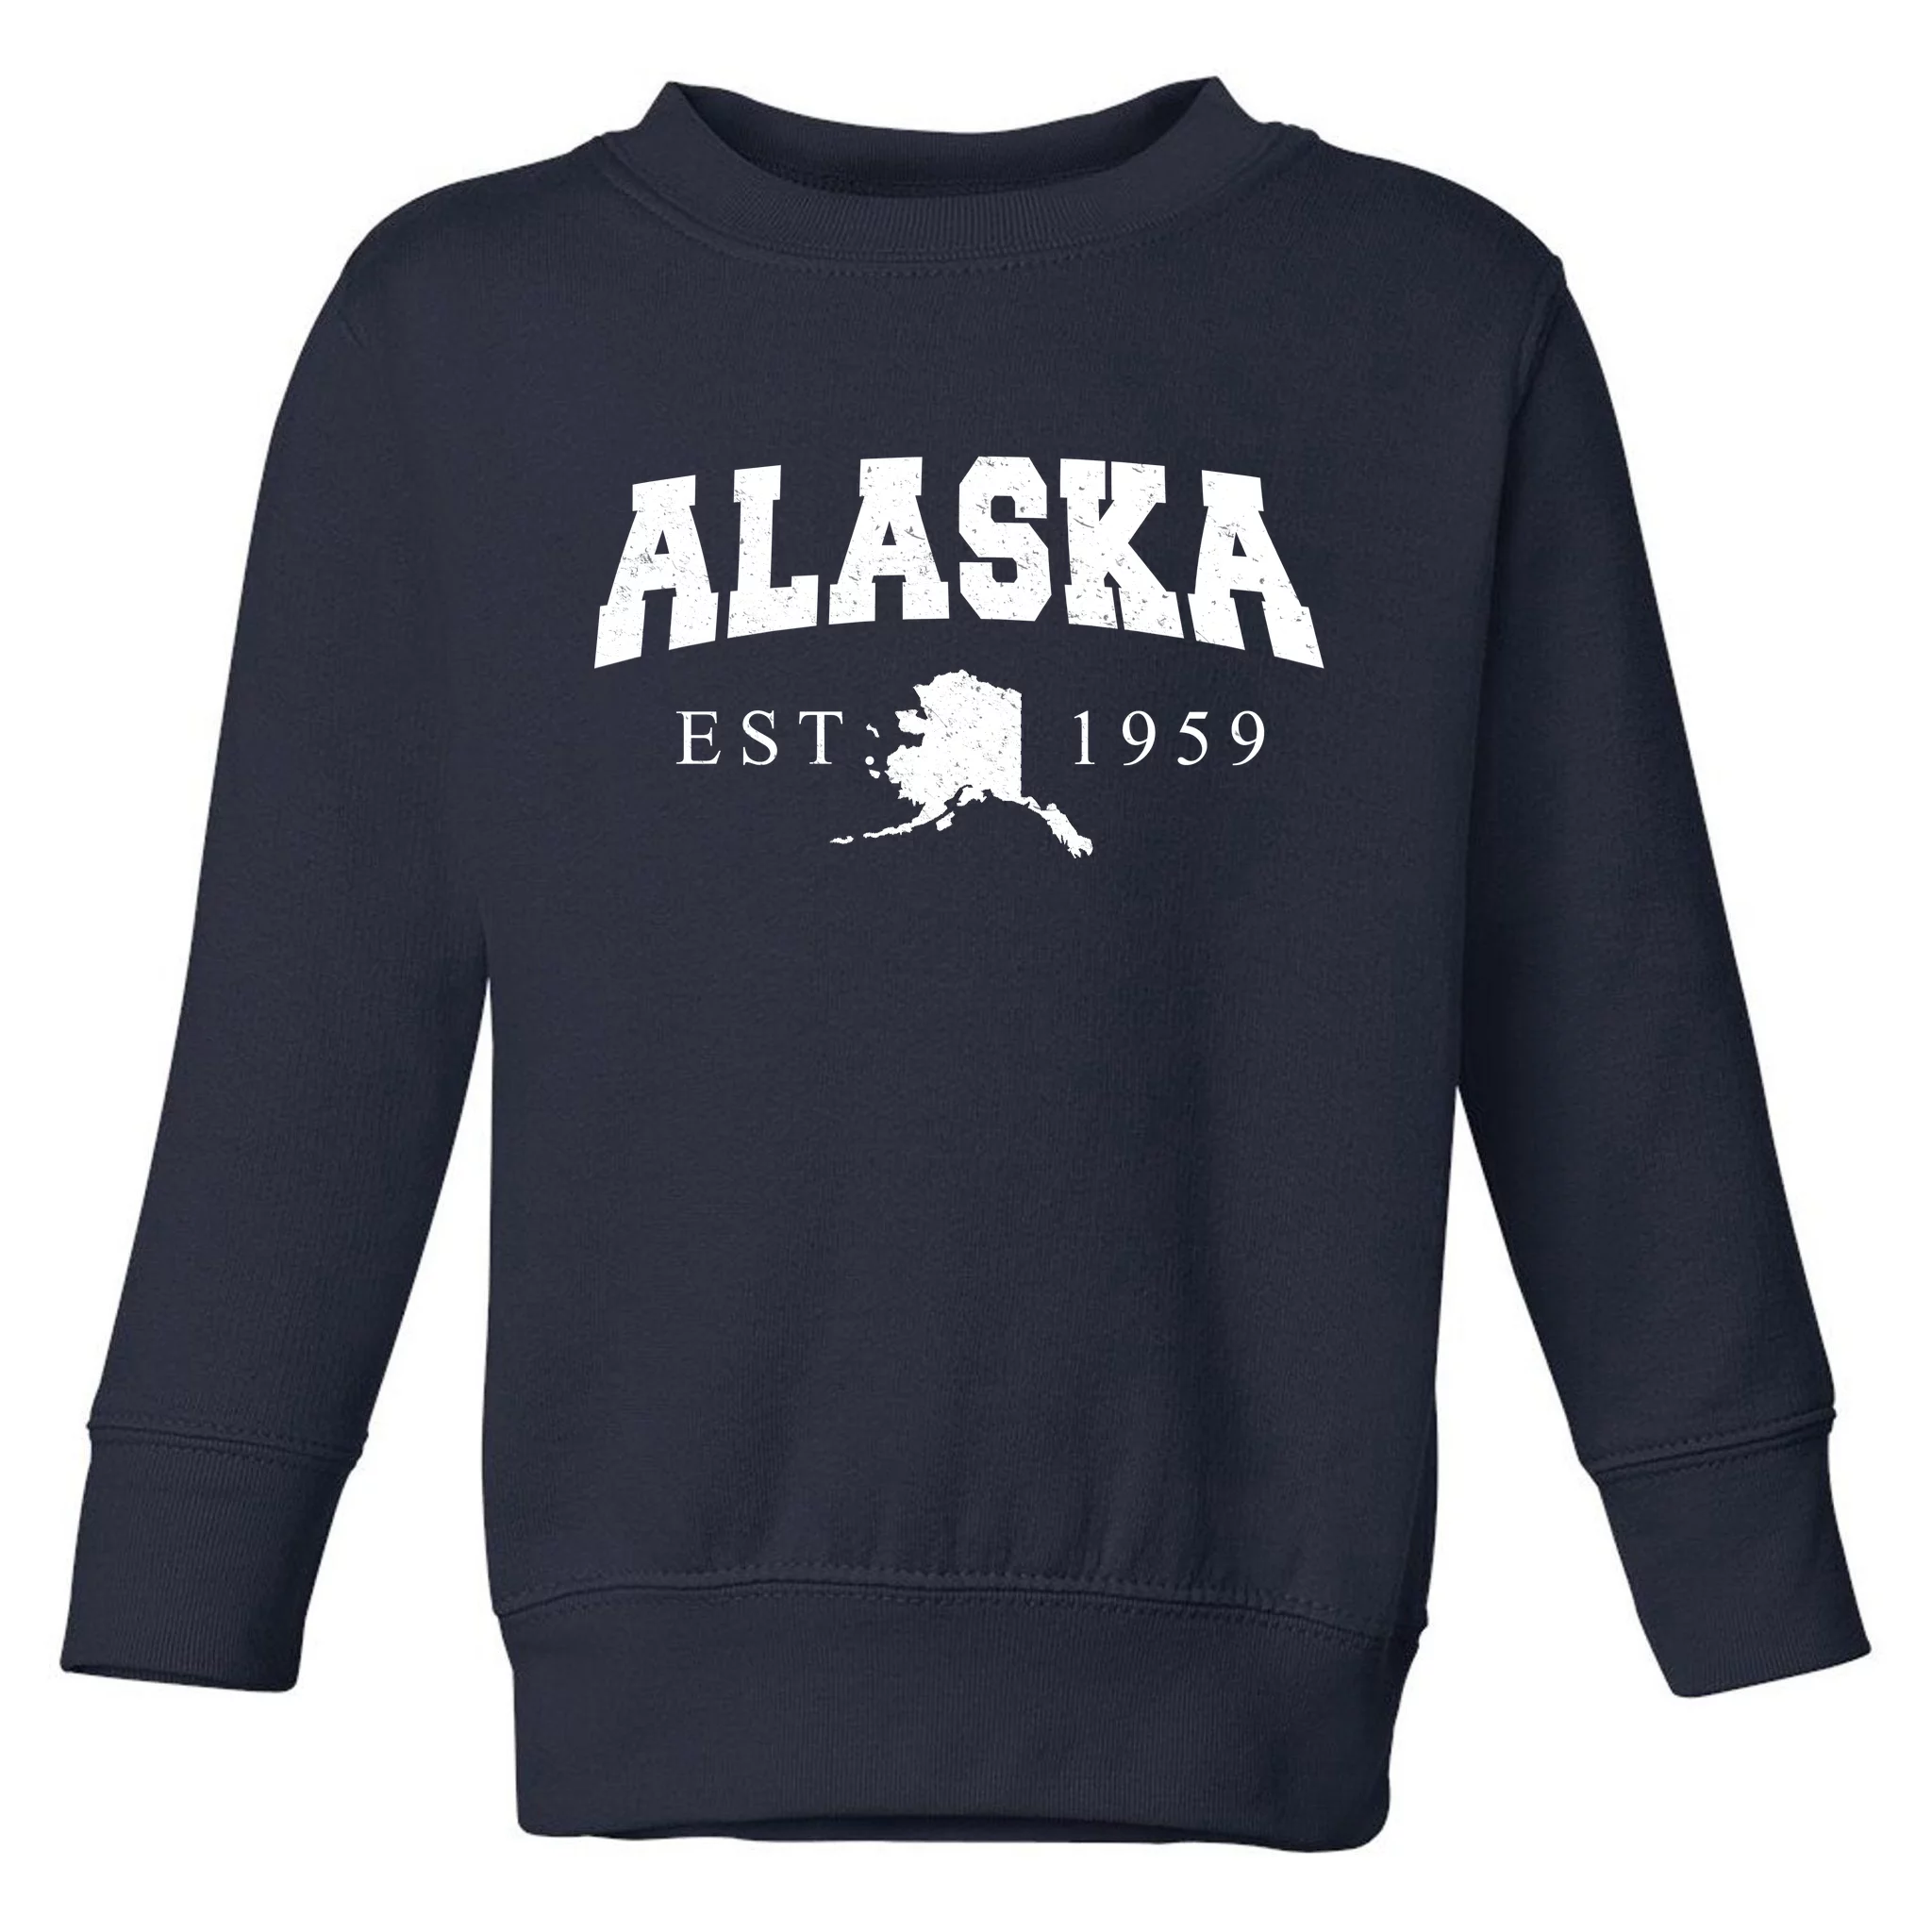 Alaska EST. 1959 Toddler Sweatshirt